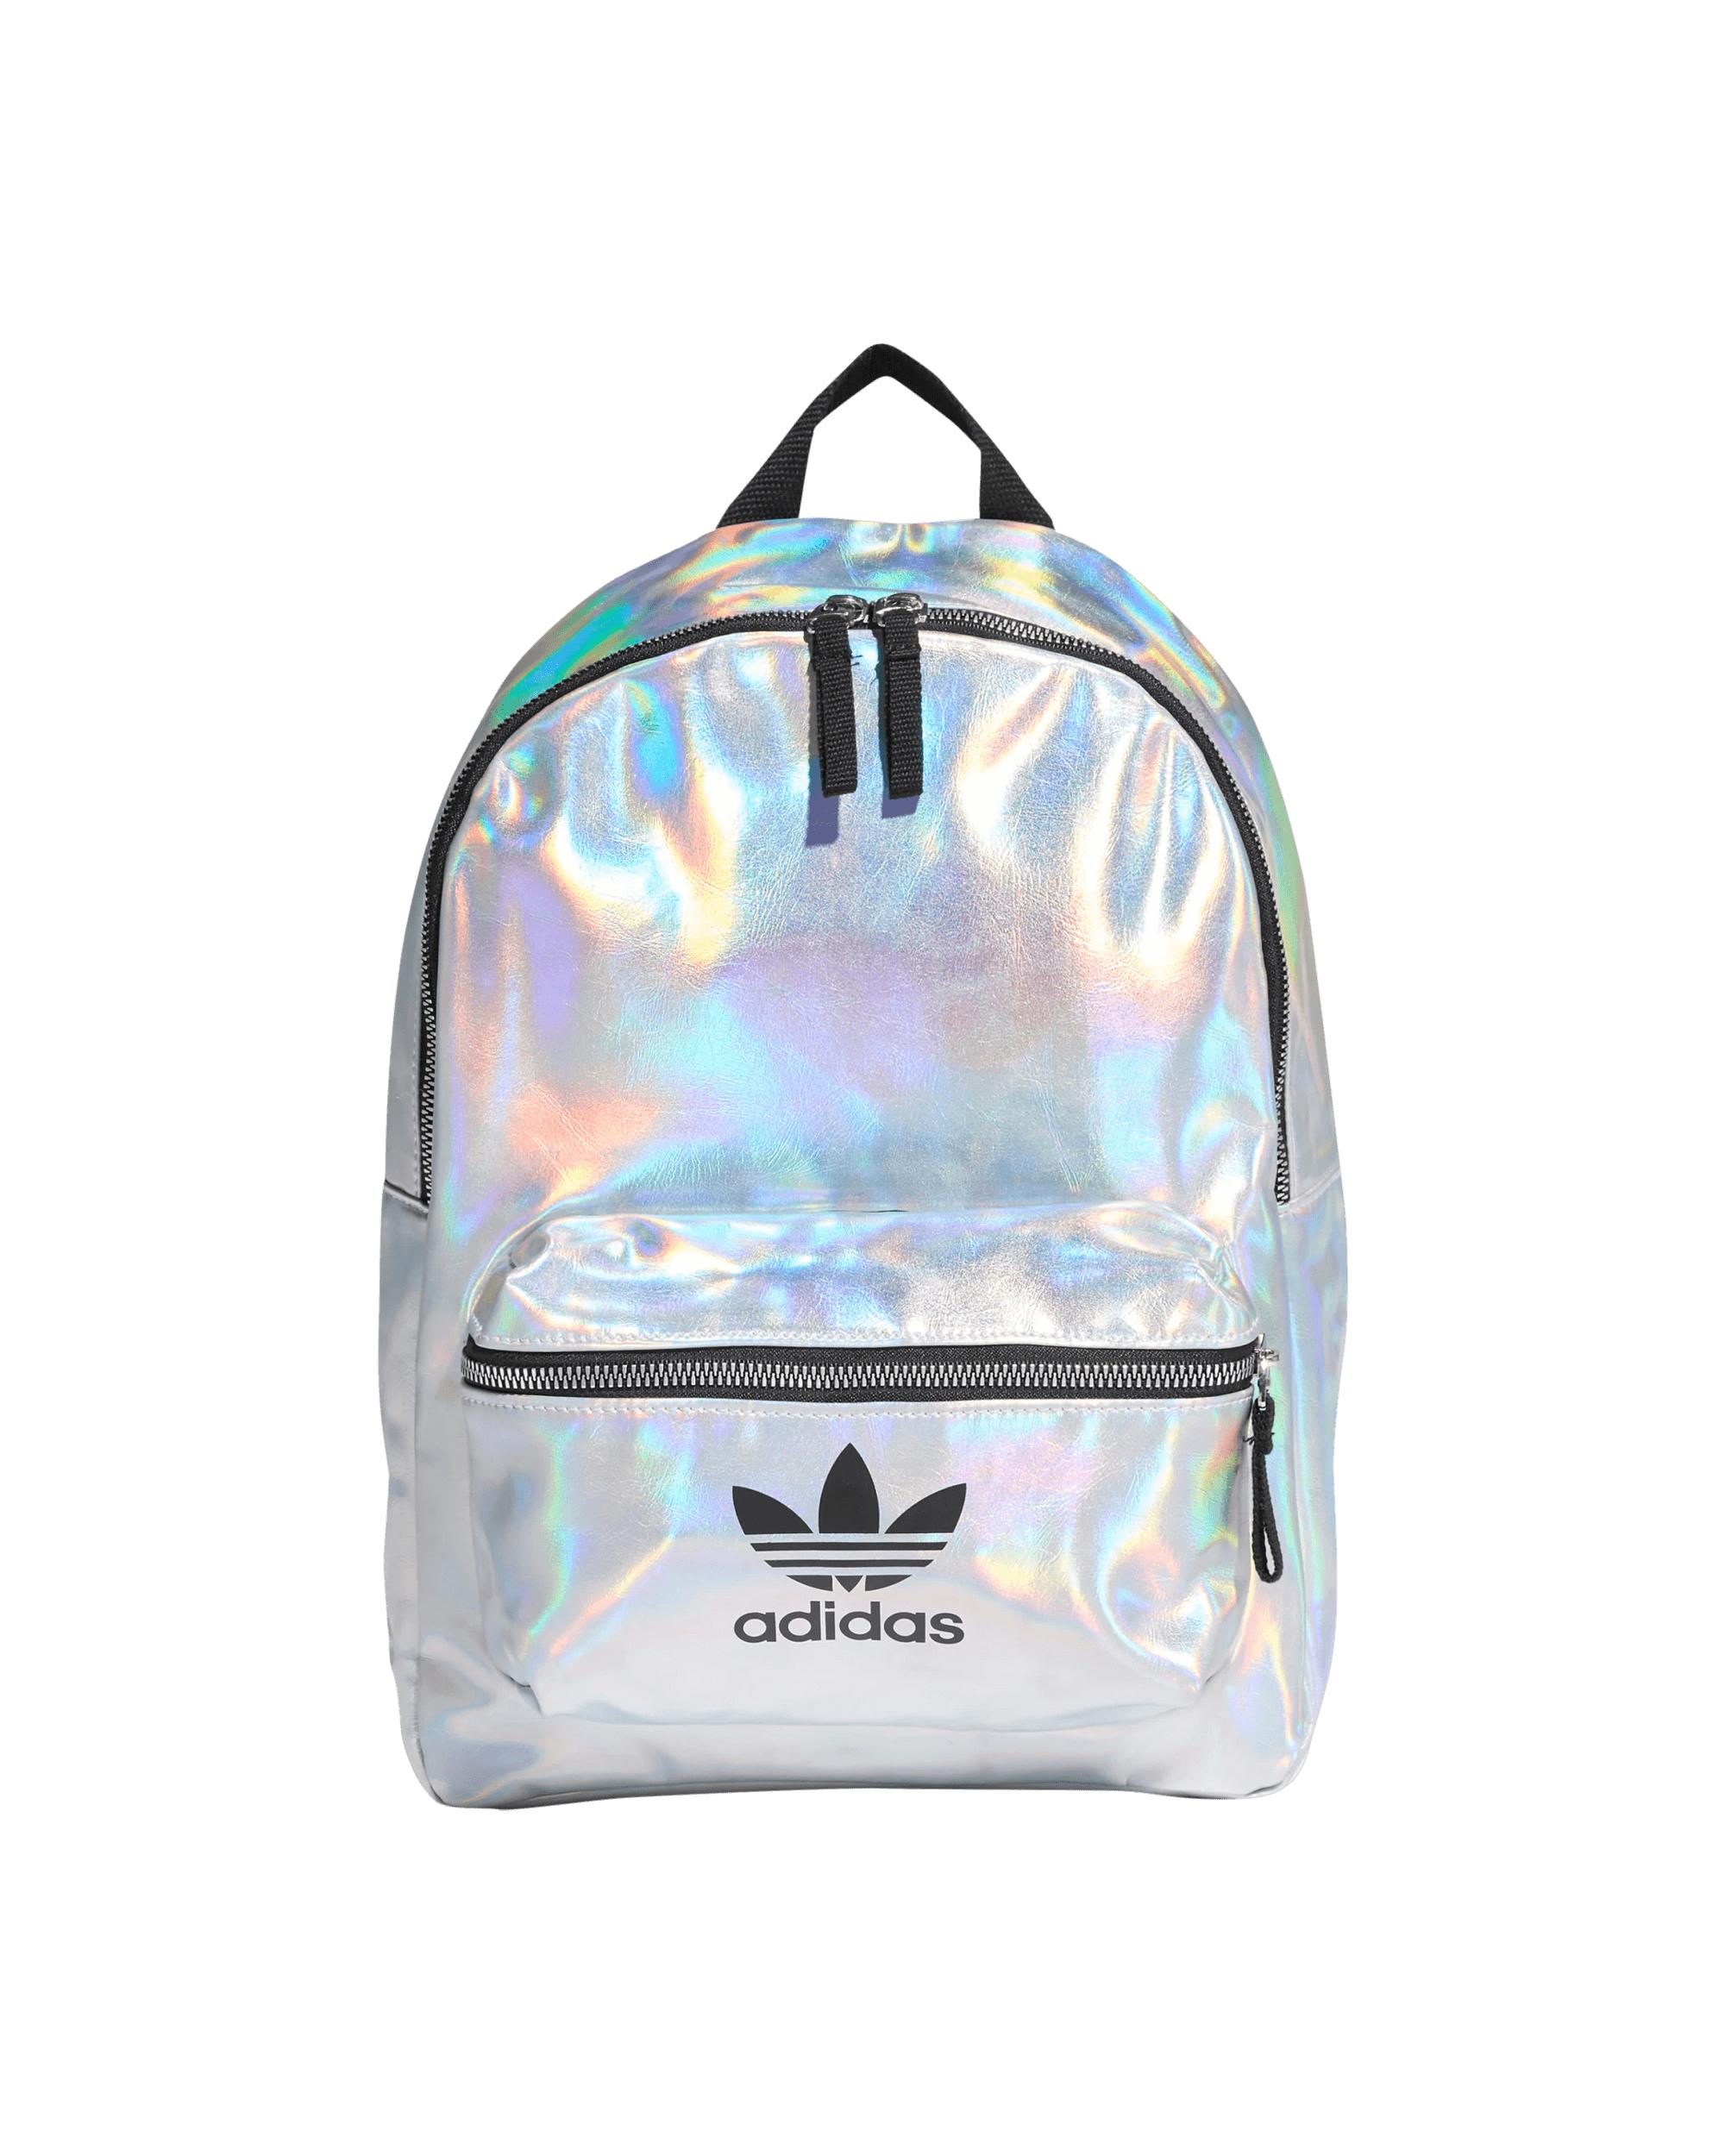 adidas hologram backpack